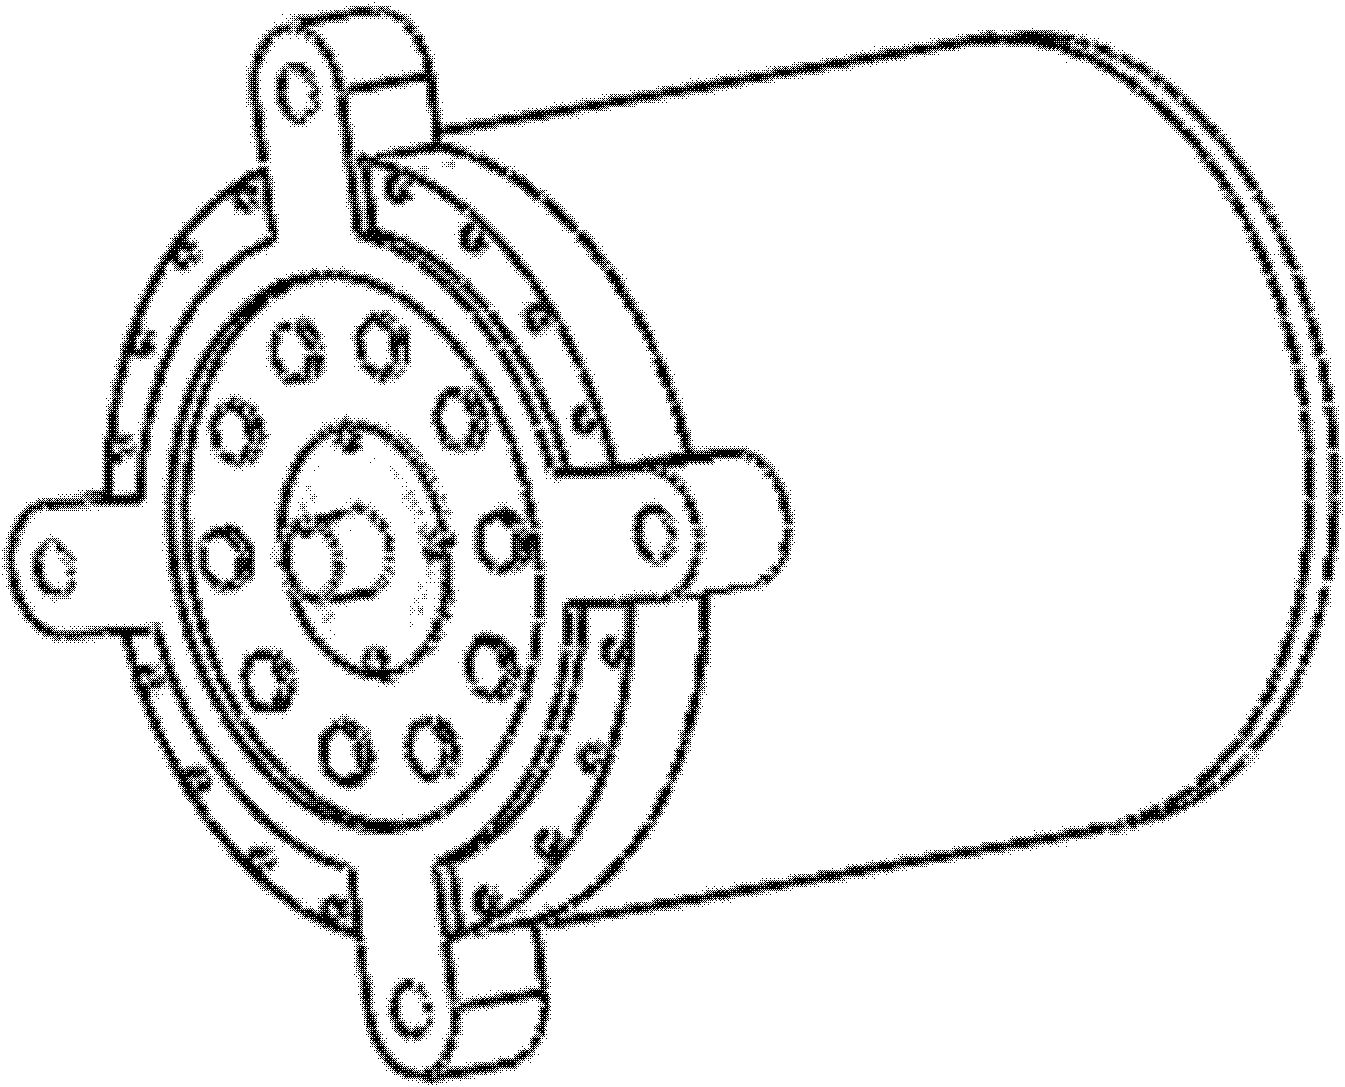 Rotary piezoelectric generation device